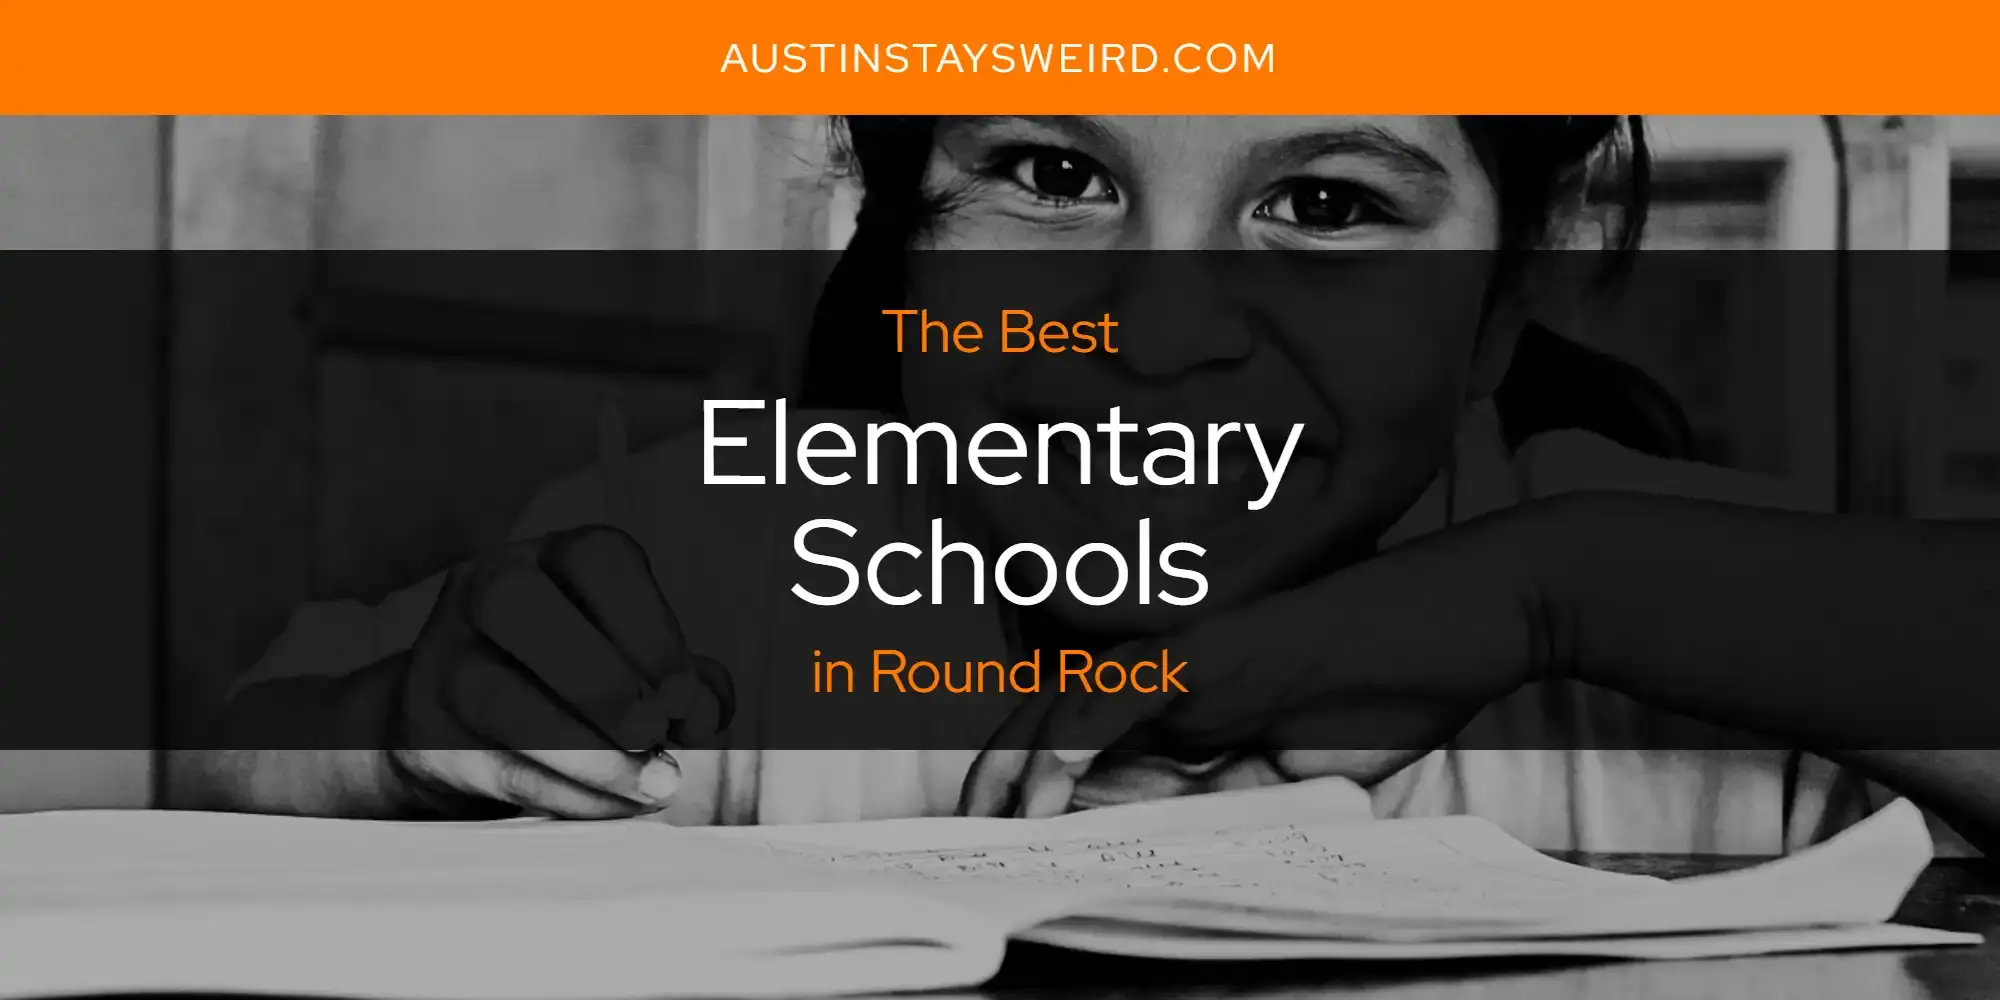 Best Elementary Schools in Round Rock? Here's the Top 8